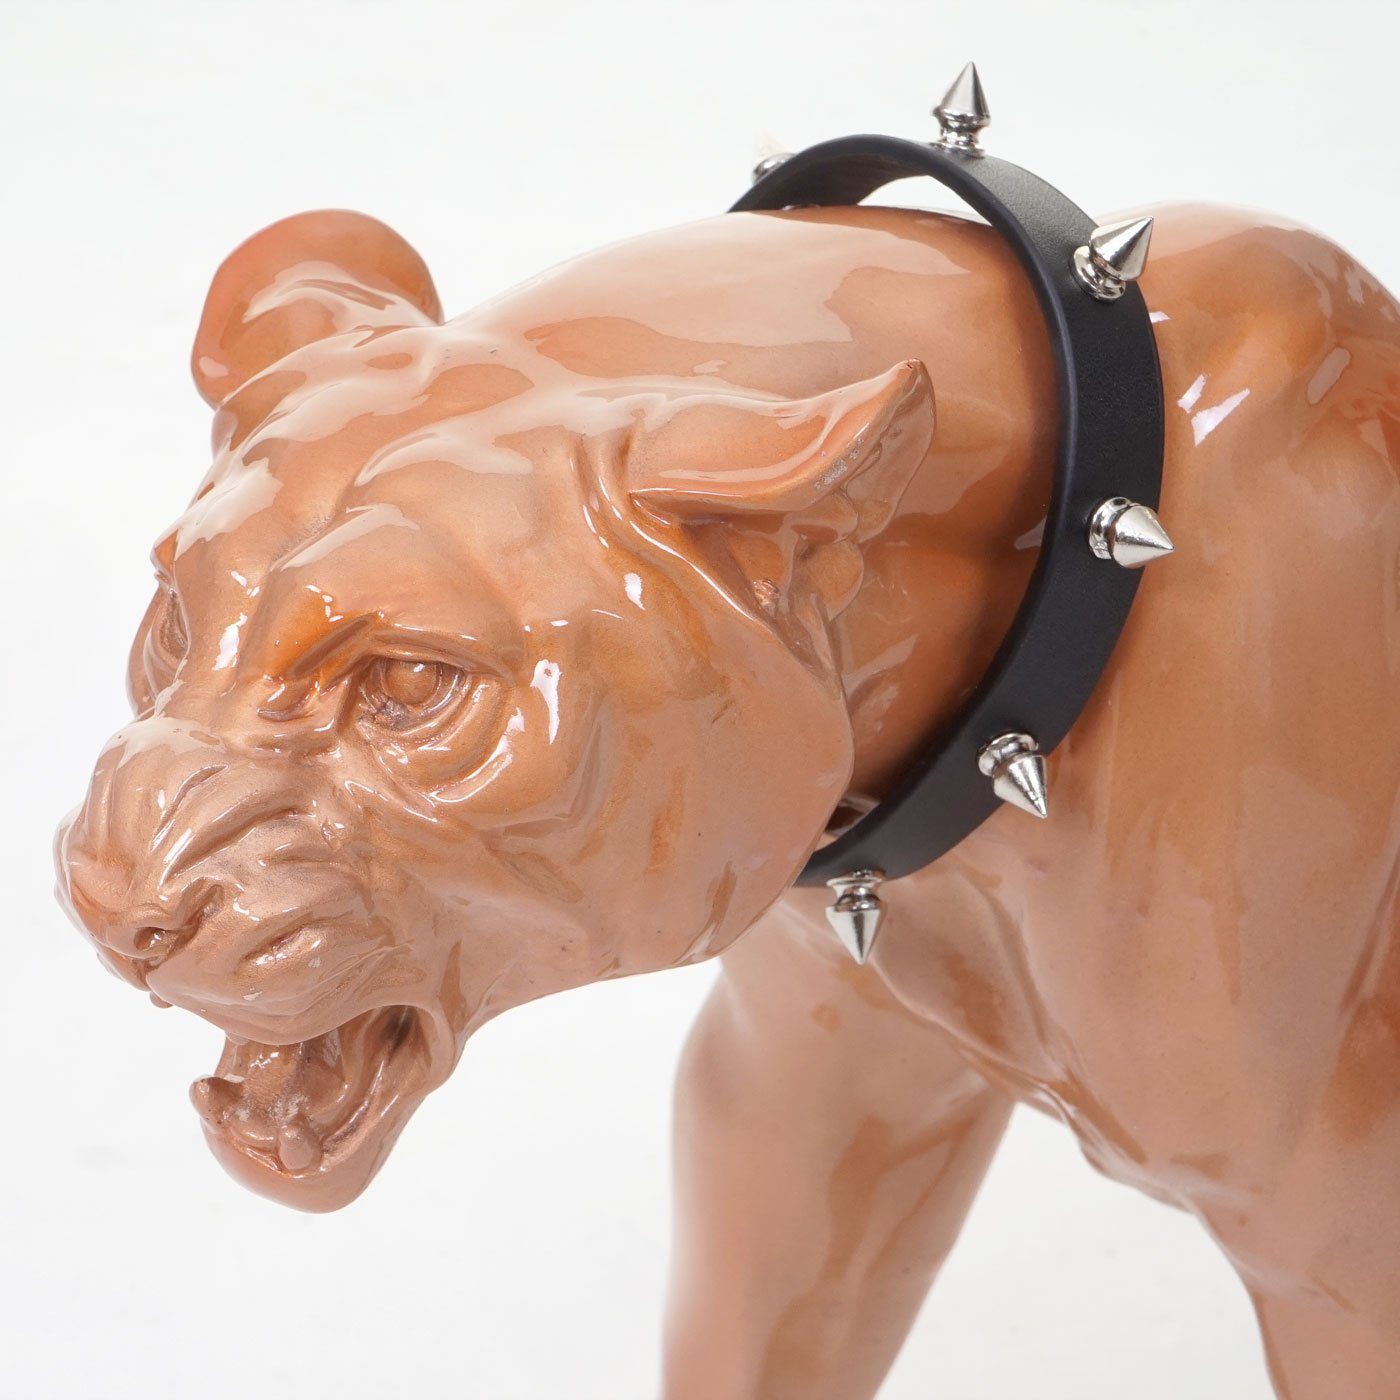 Tierfigur Witterungsbeständig, -10° C, Inkl. Panther, bis Frostbeständig antik Halsband MCW Indoor/Outdoor-geeignet,